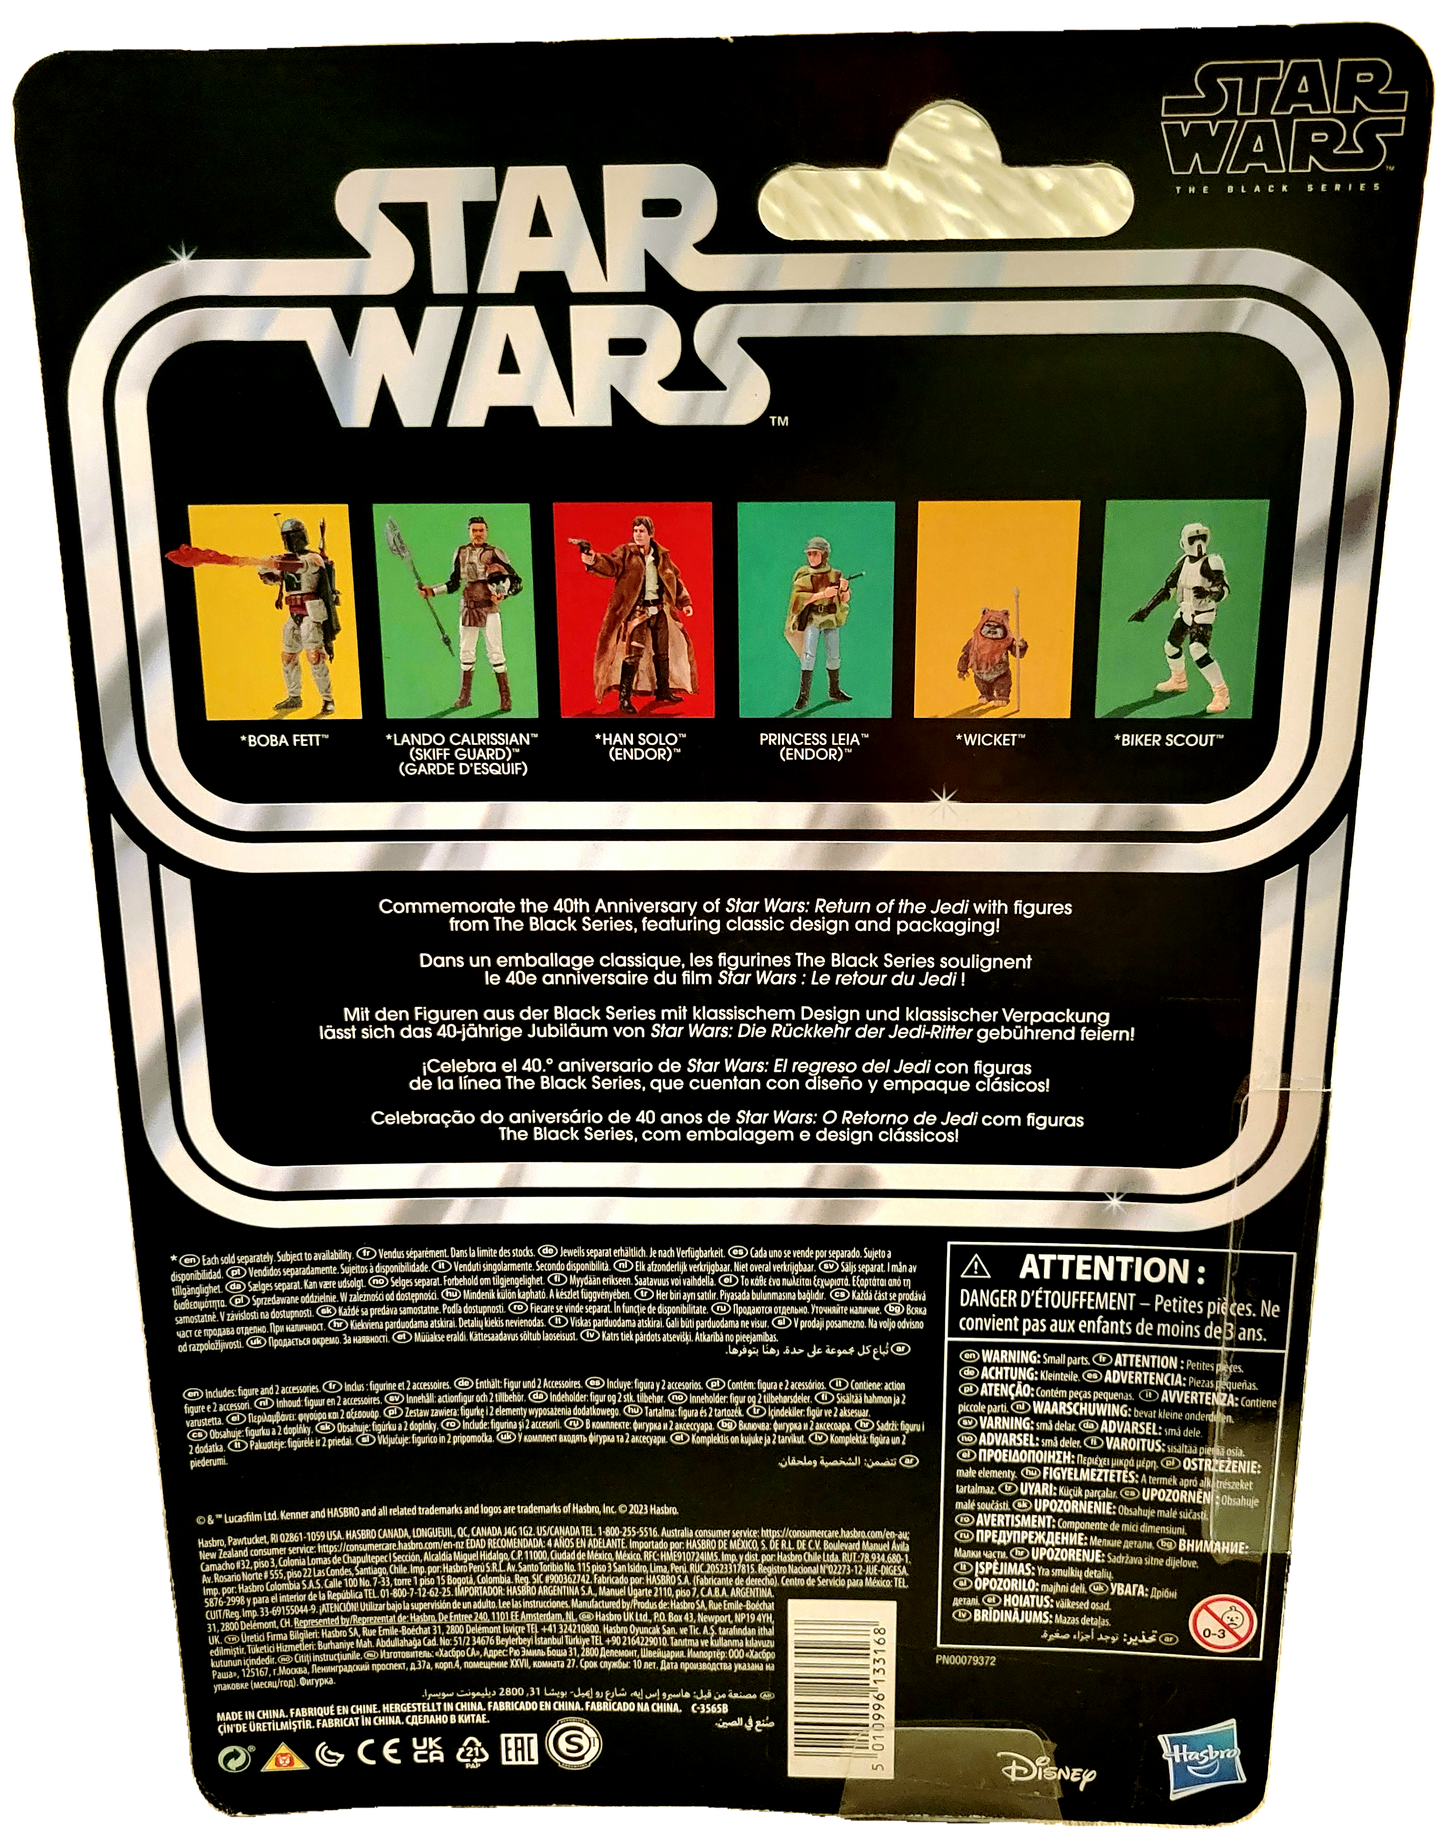 Hasbro Kenner Star Wars The Black Series Return of the Jedi 40th Anniversary Princess Leia (Endor) Action Figure